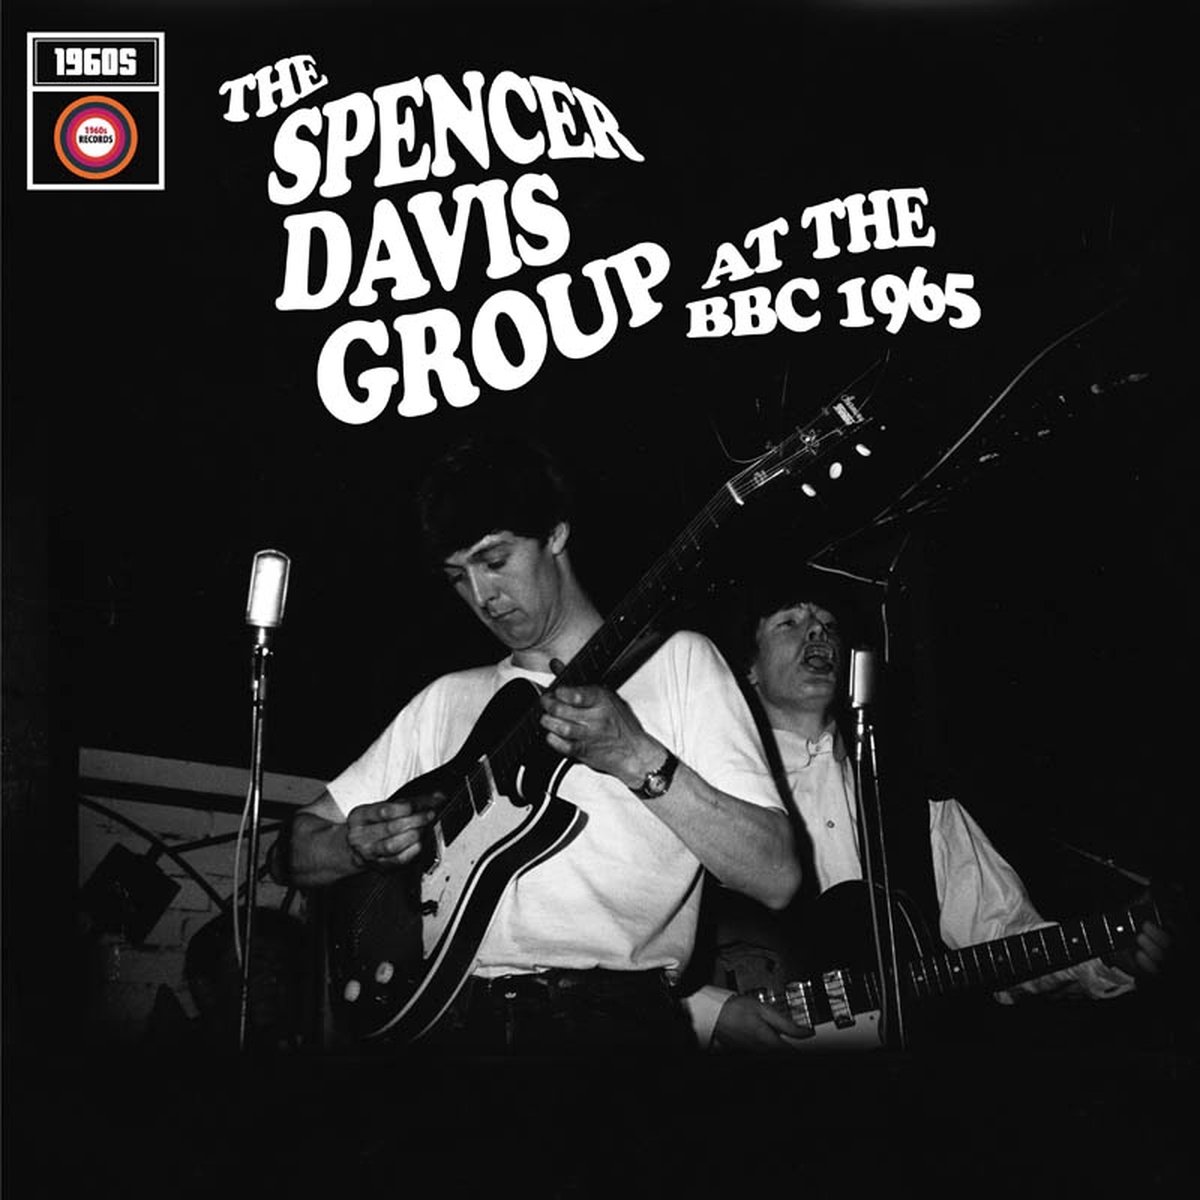 Spencer Davis Group - At The BBC 1965 (LP) - Spencer Davis Group